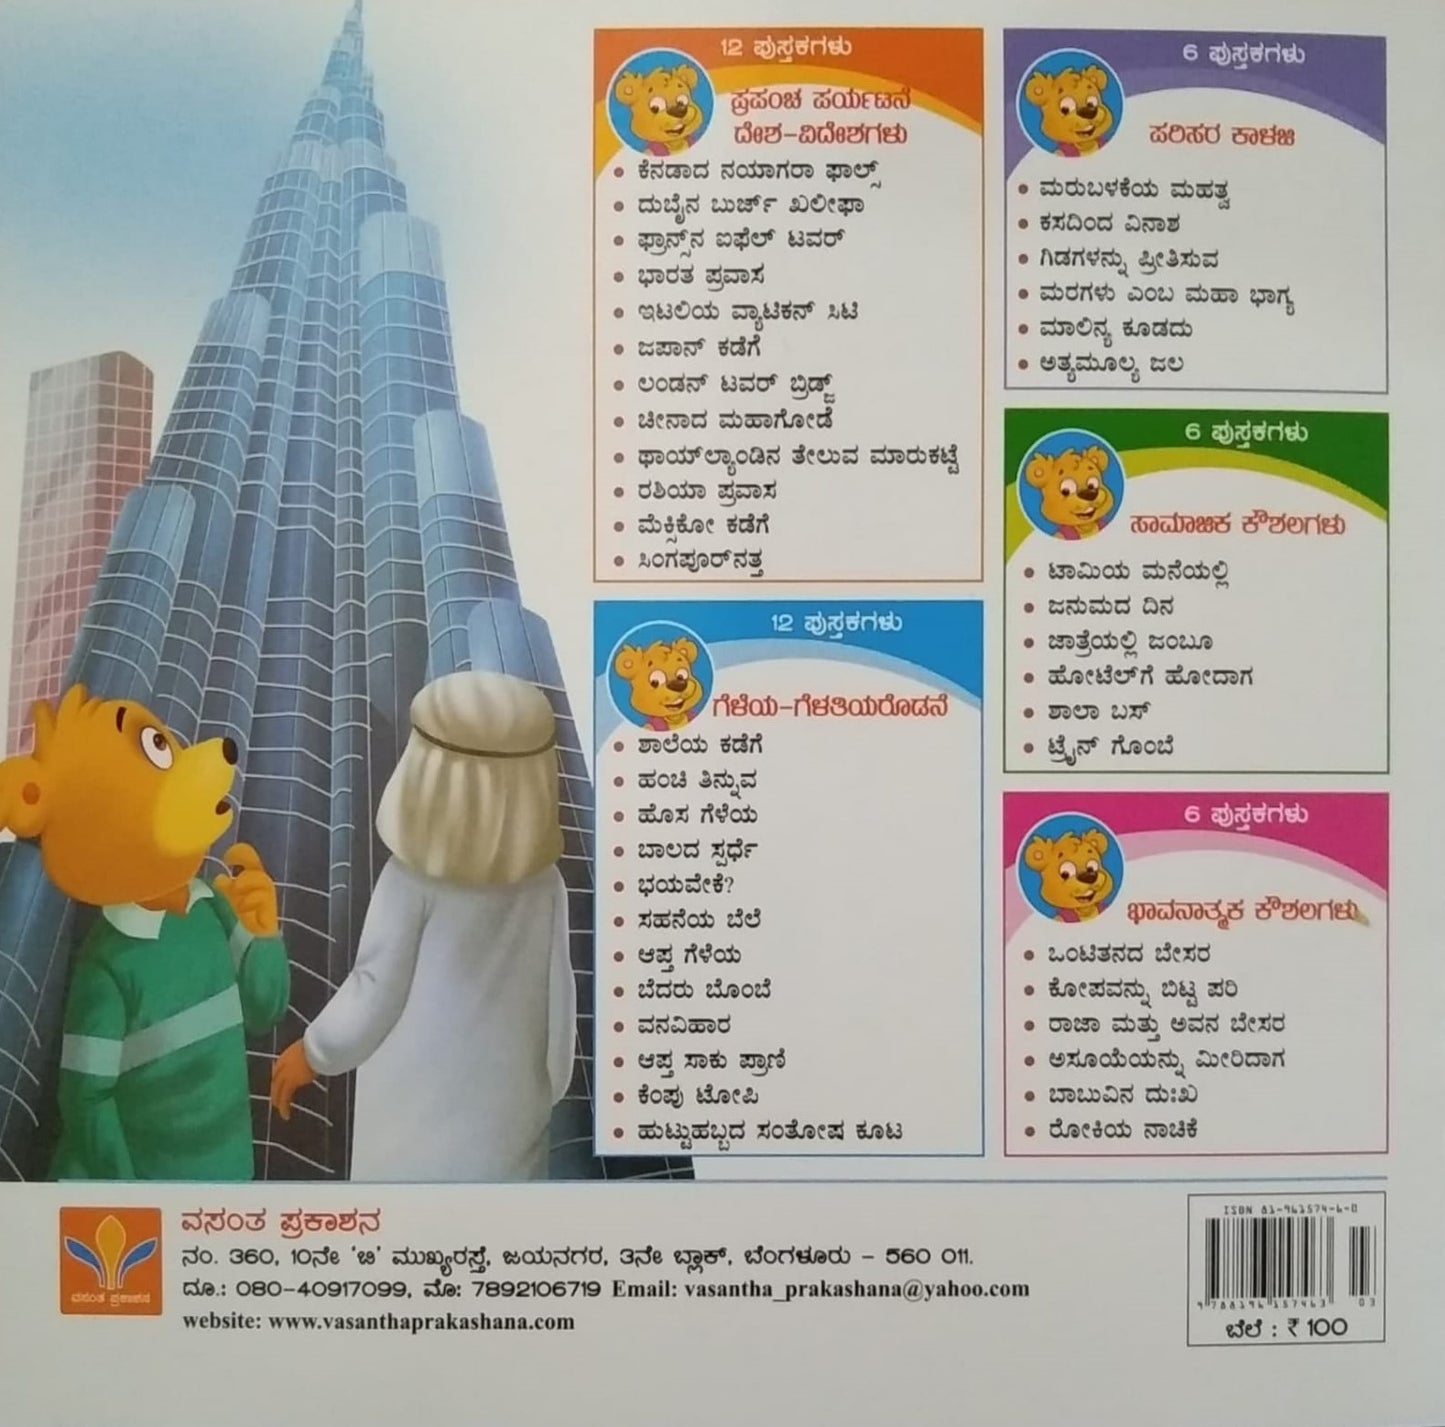 Dubaina Burj Kaleepha ia a book of Children's Stories Book, Written by S. Pattabhirama, Published by Vasantha Prakashana